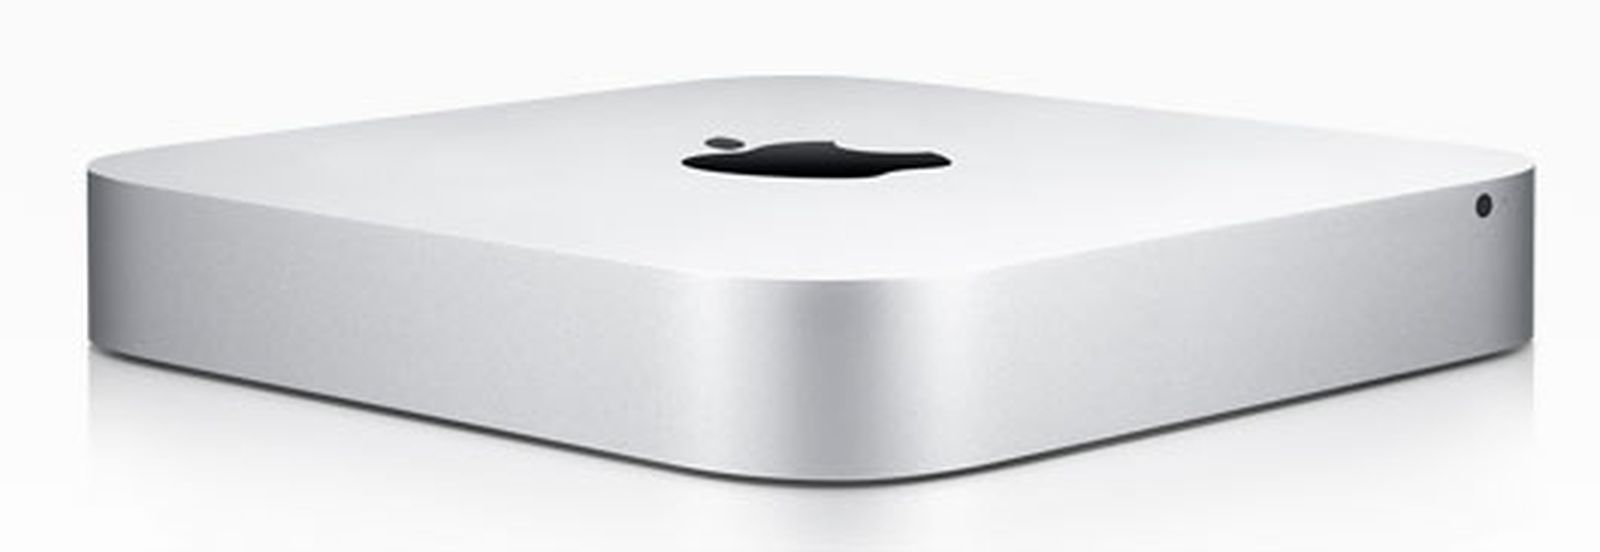 Apple Releases New Sandy Bridge Mac Minis and Thunderbolt Display 